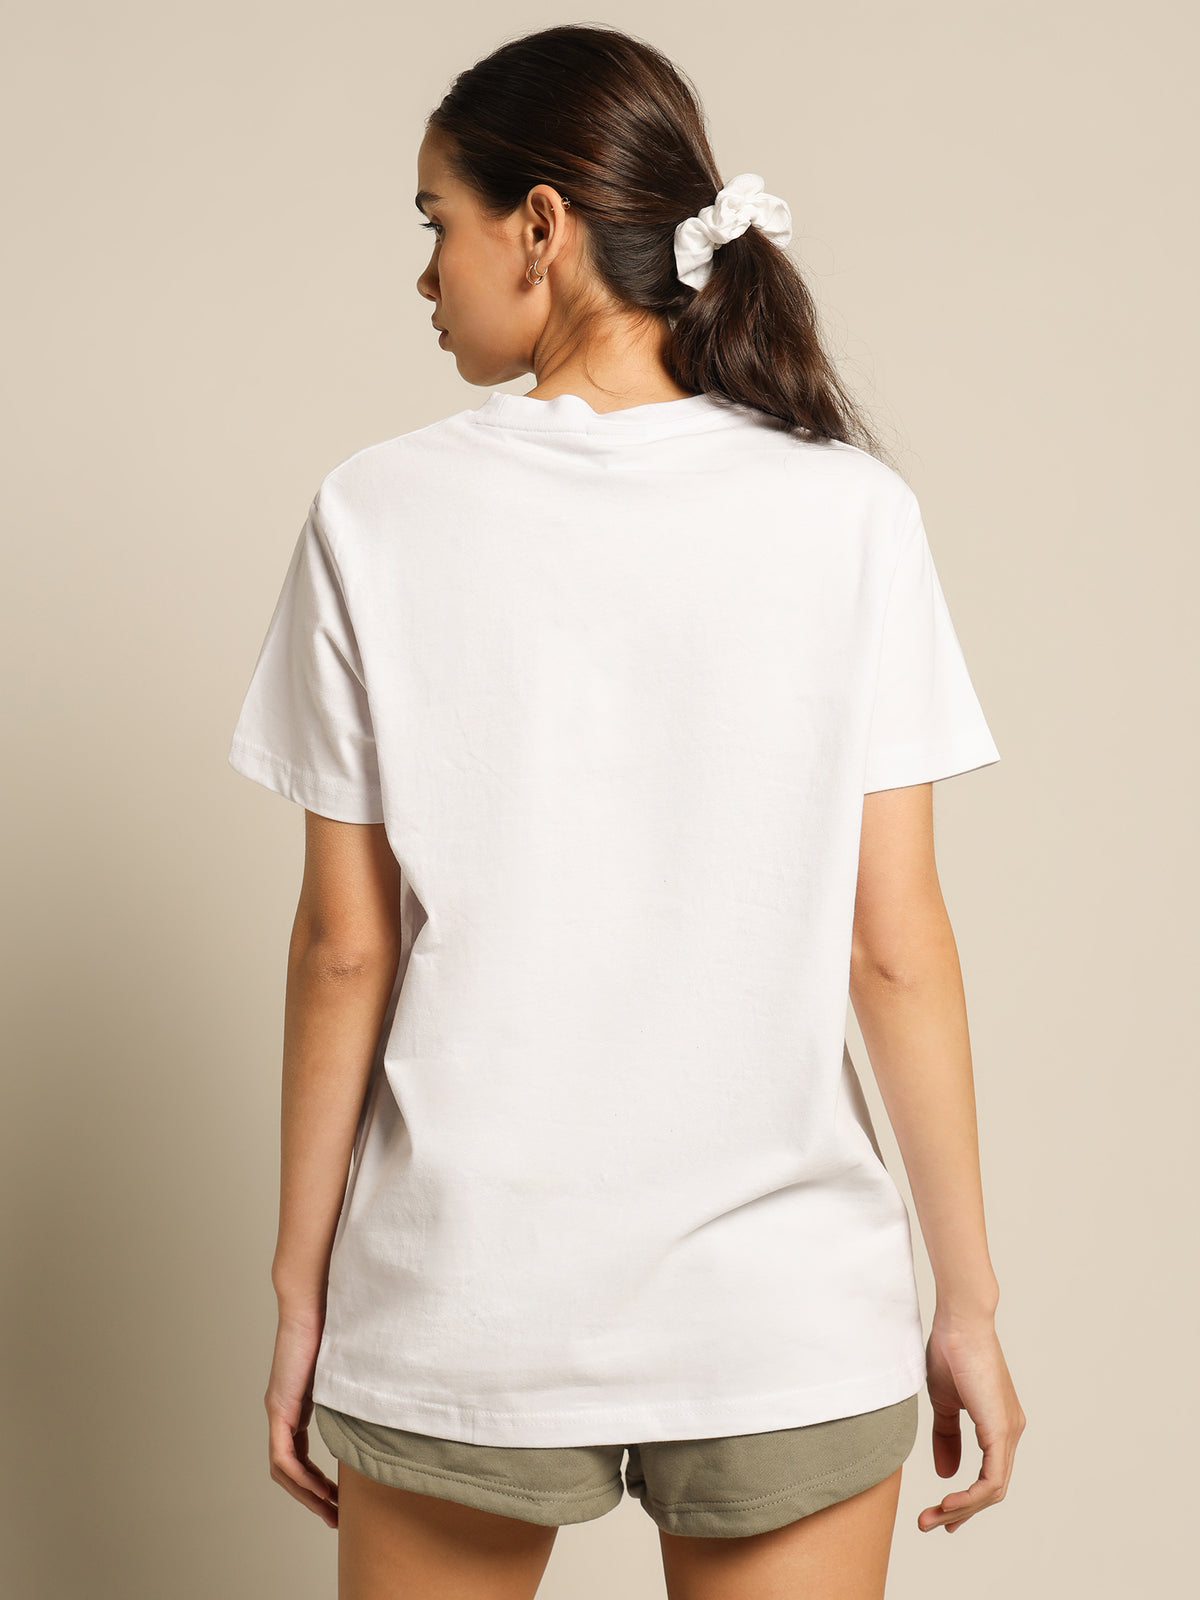 Kittin T-Shirt in White